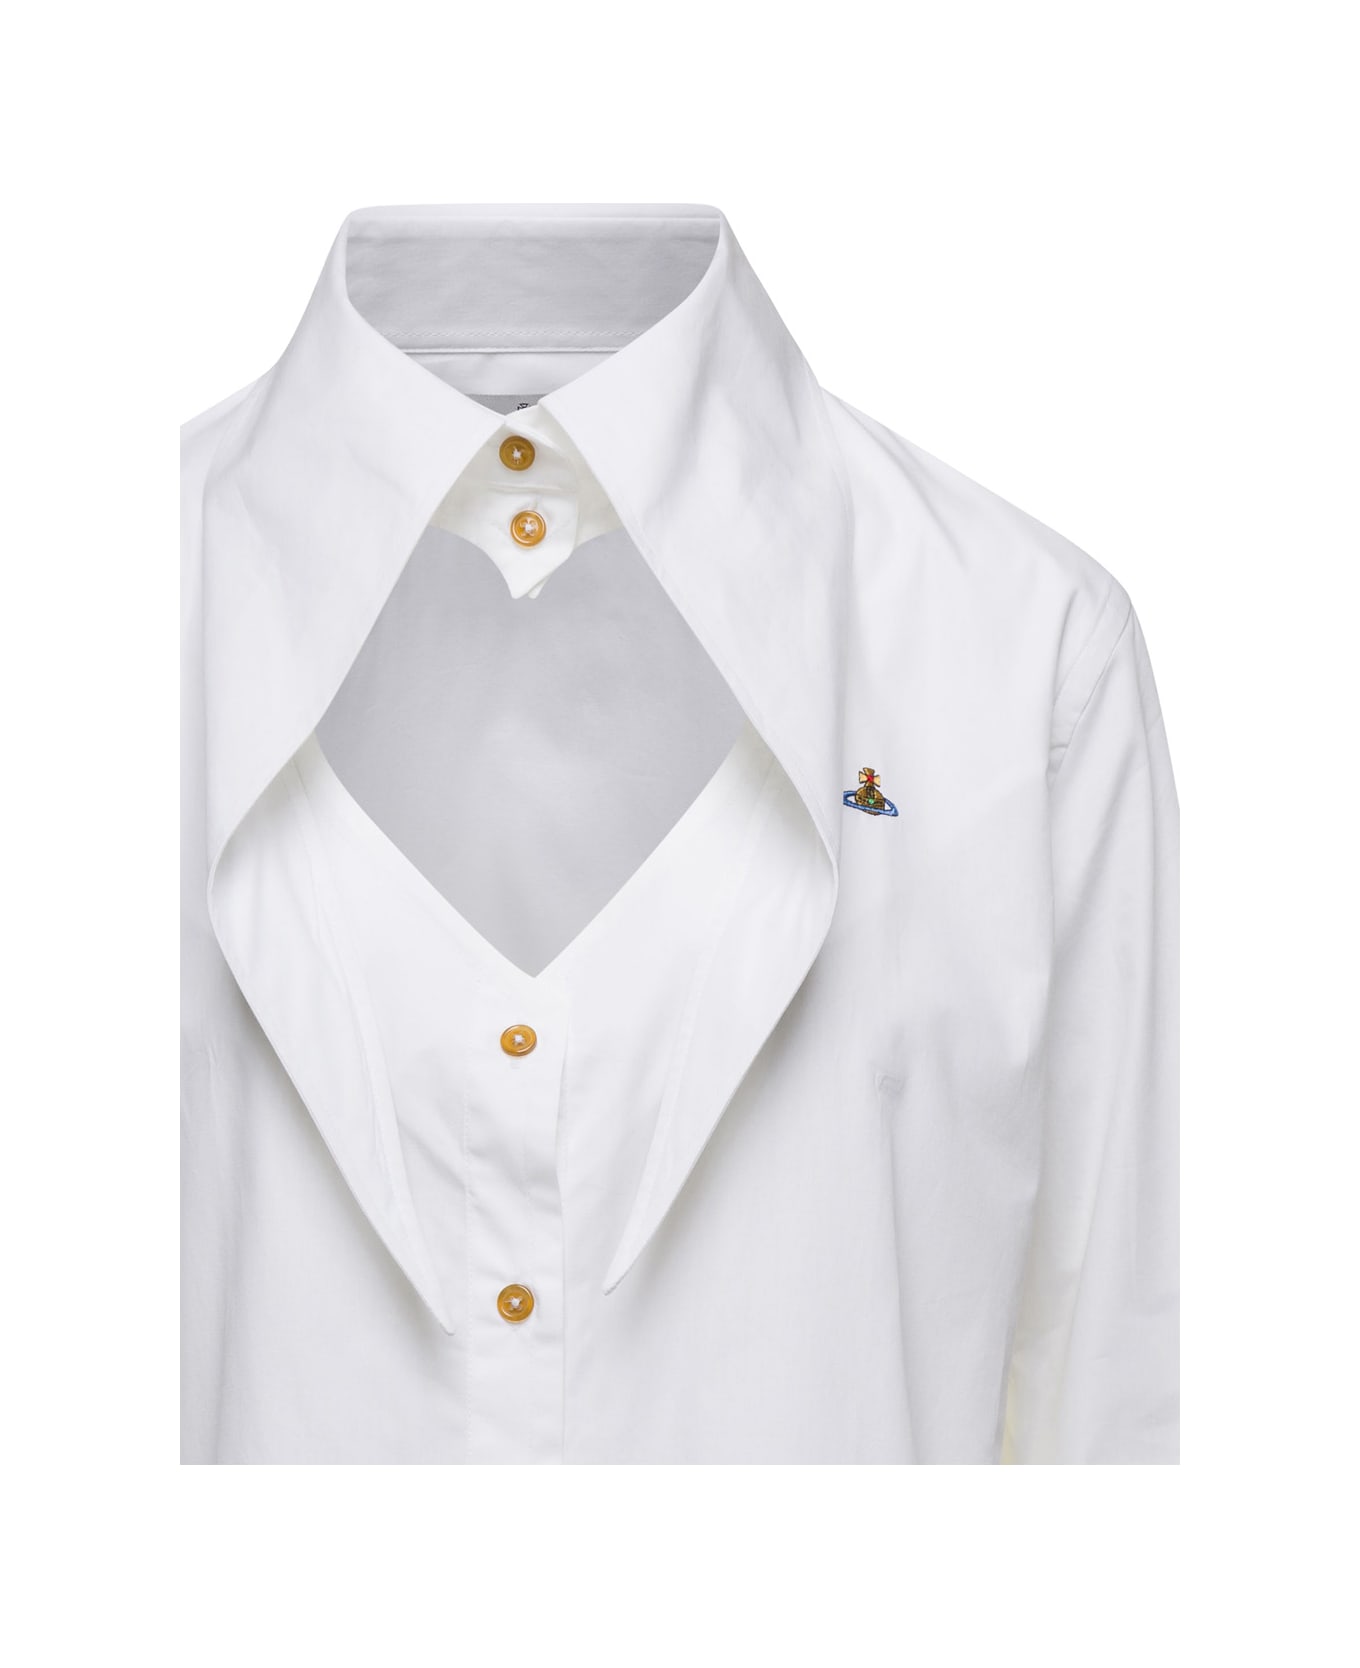 Vivienne Westwood Shirt - White シャツ